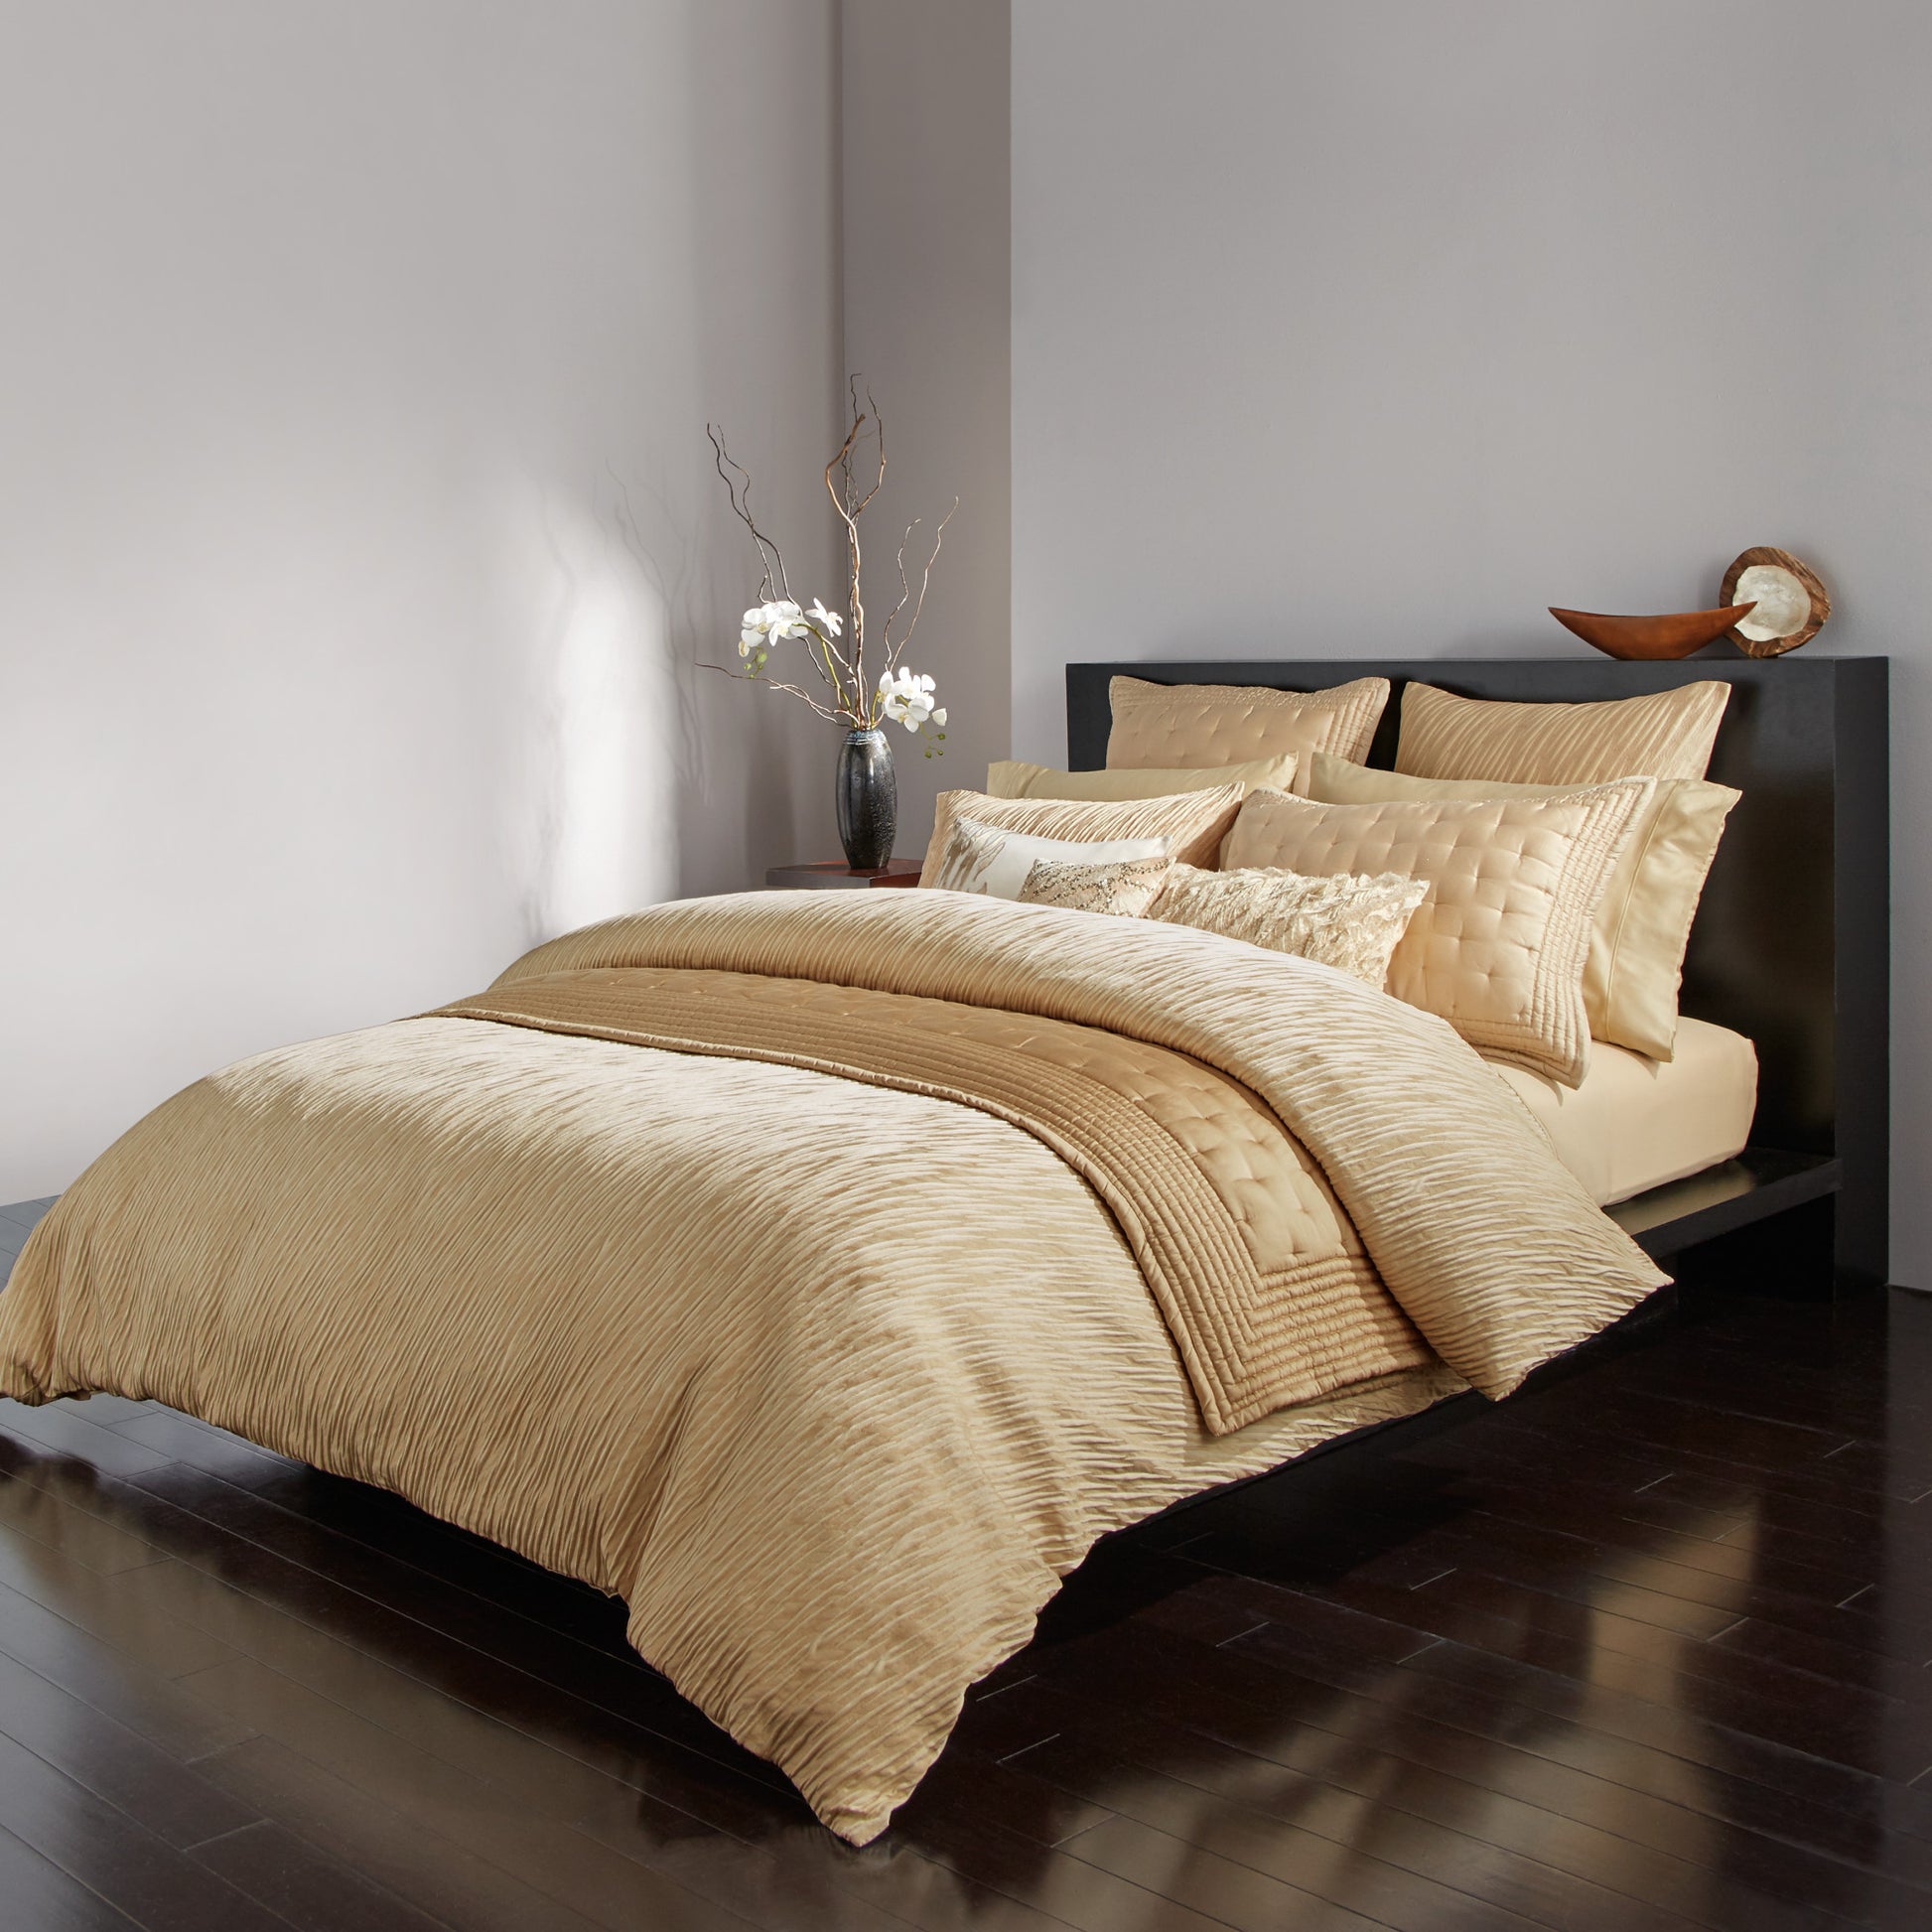 Donna Karan Gold Dust Ruffle Decorative Pillow